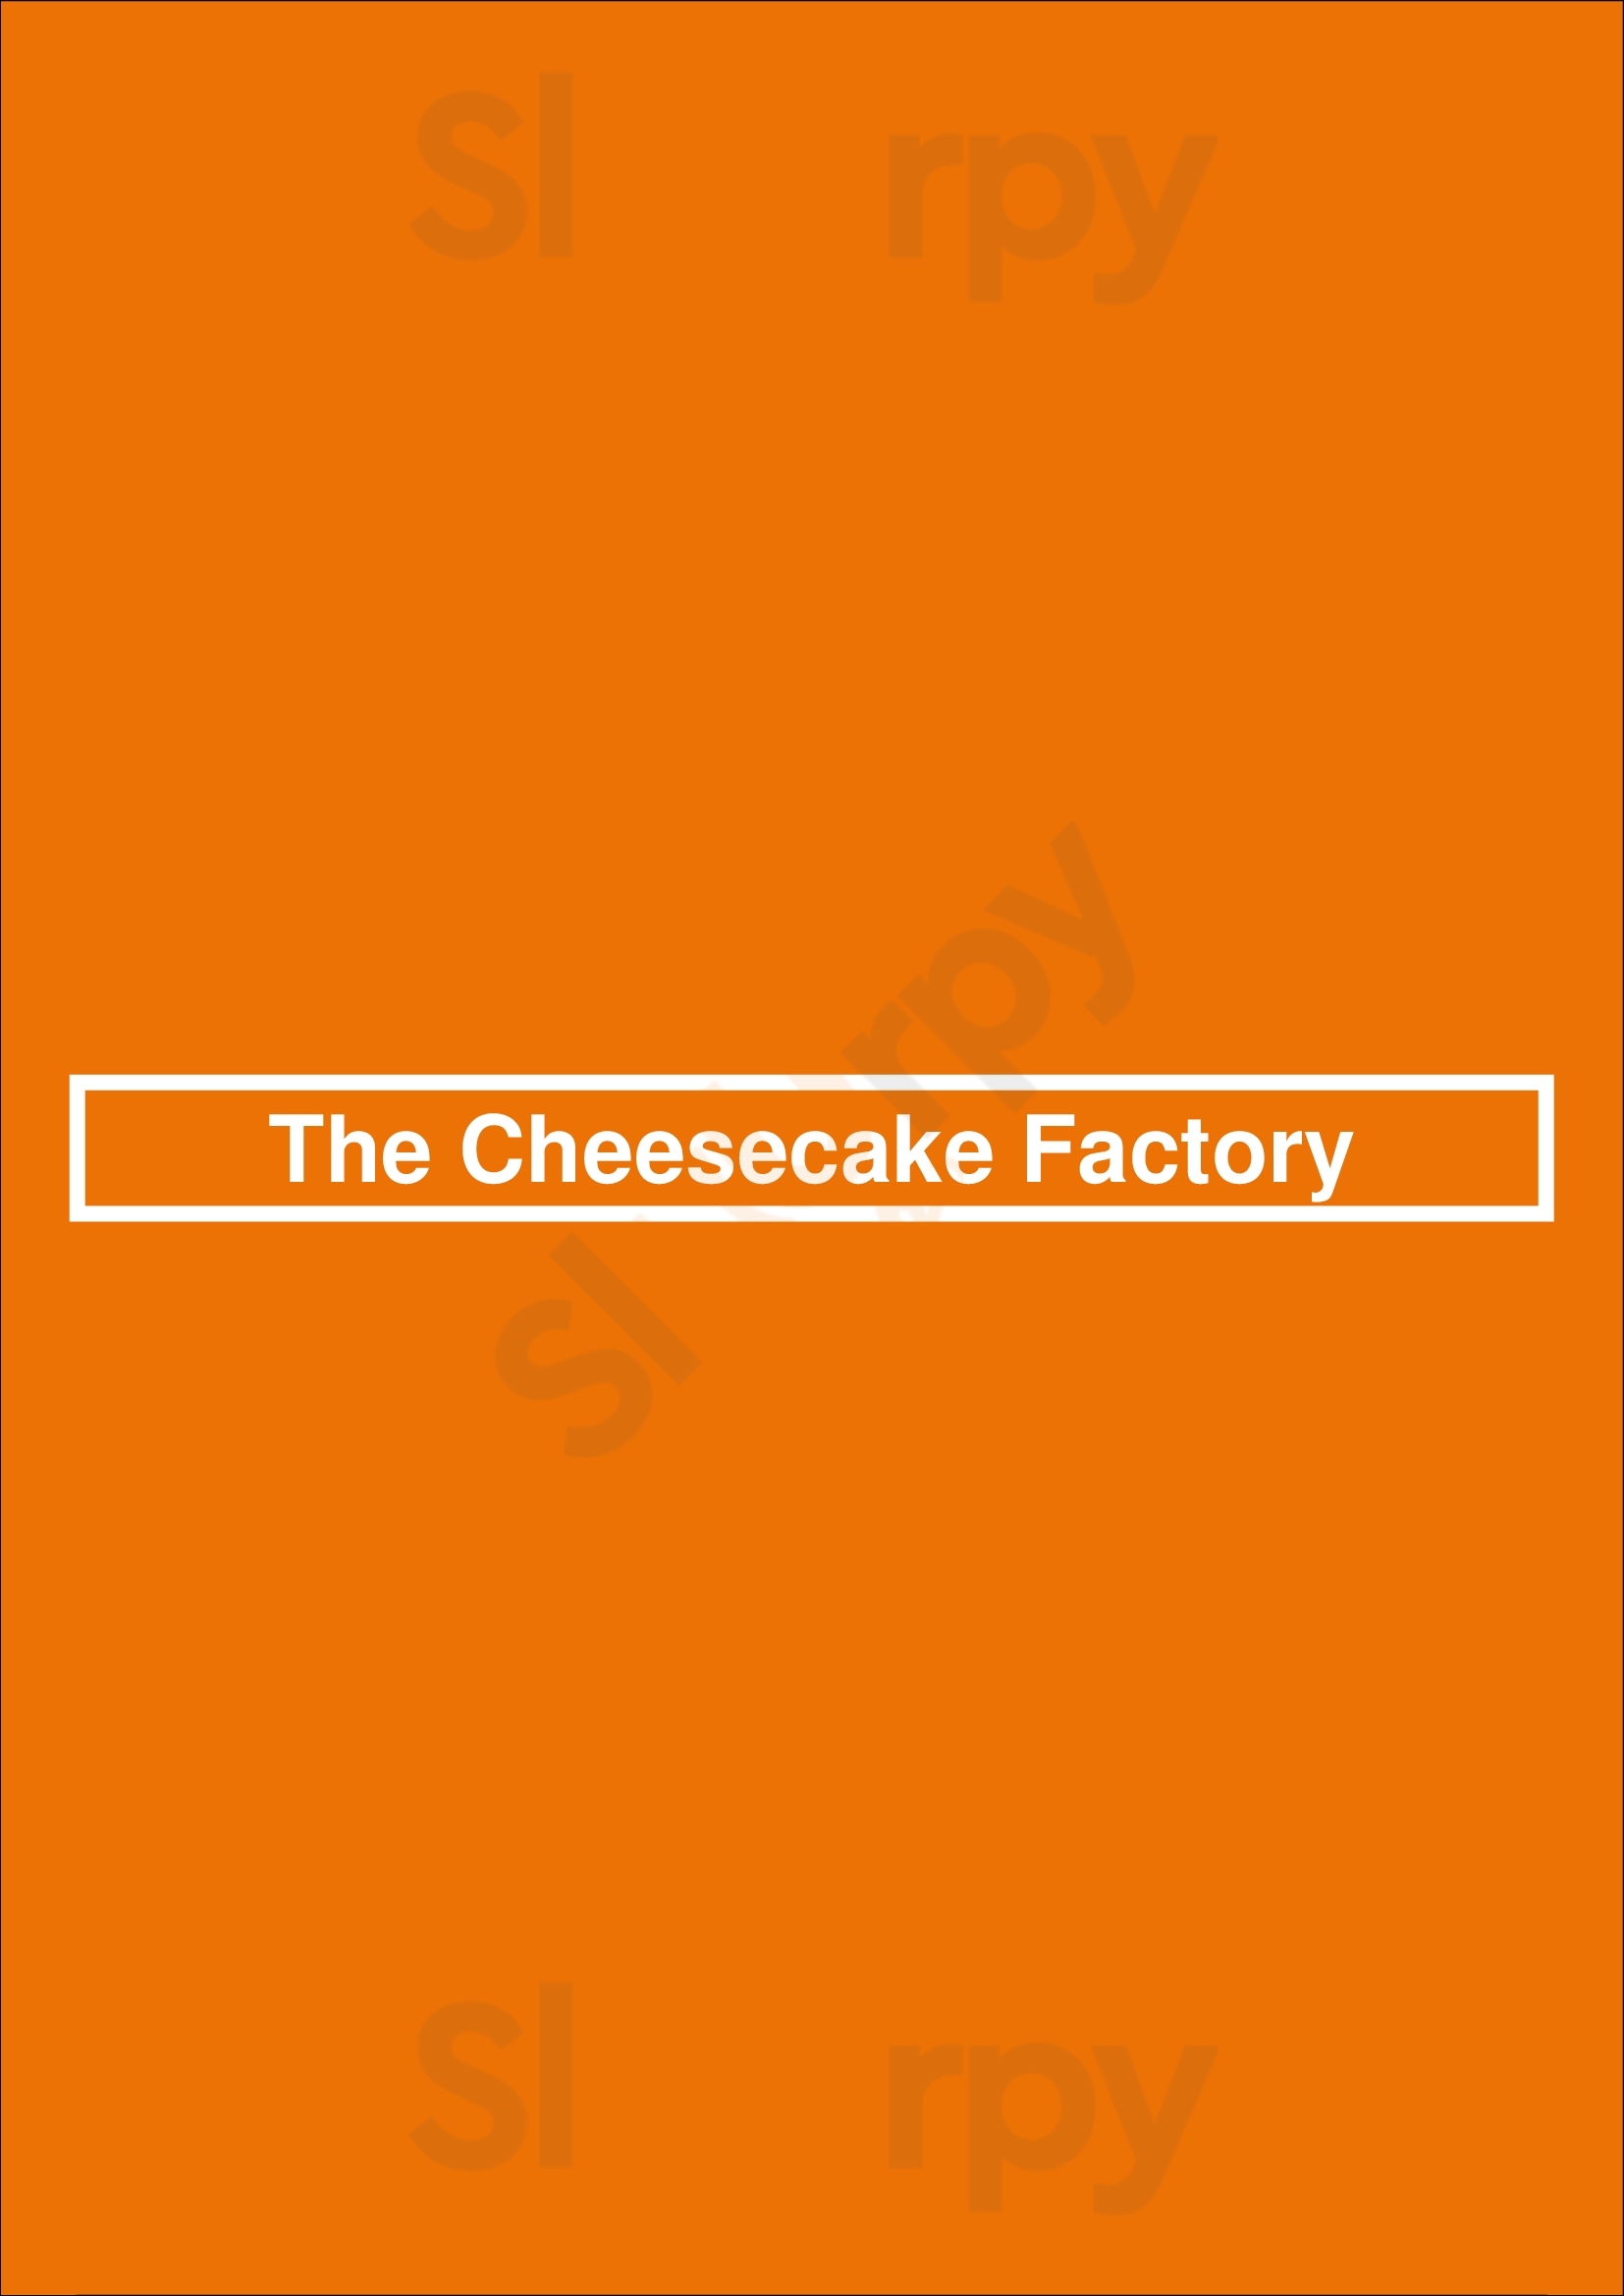 The Cheesecake Factory Reno Menu - 1